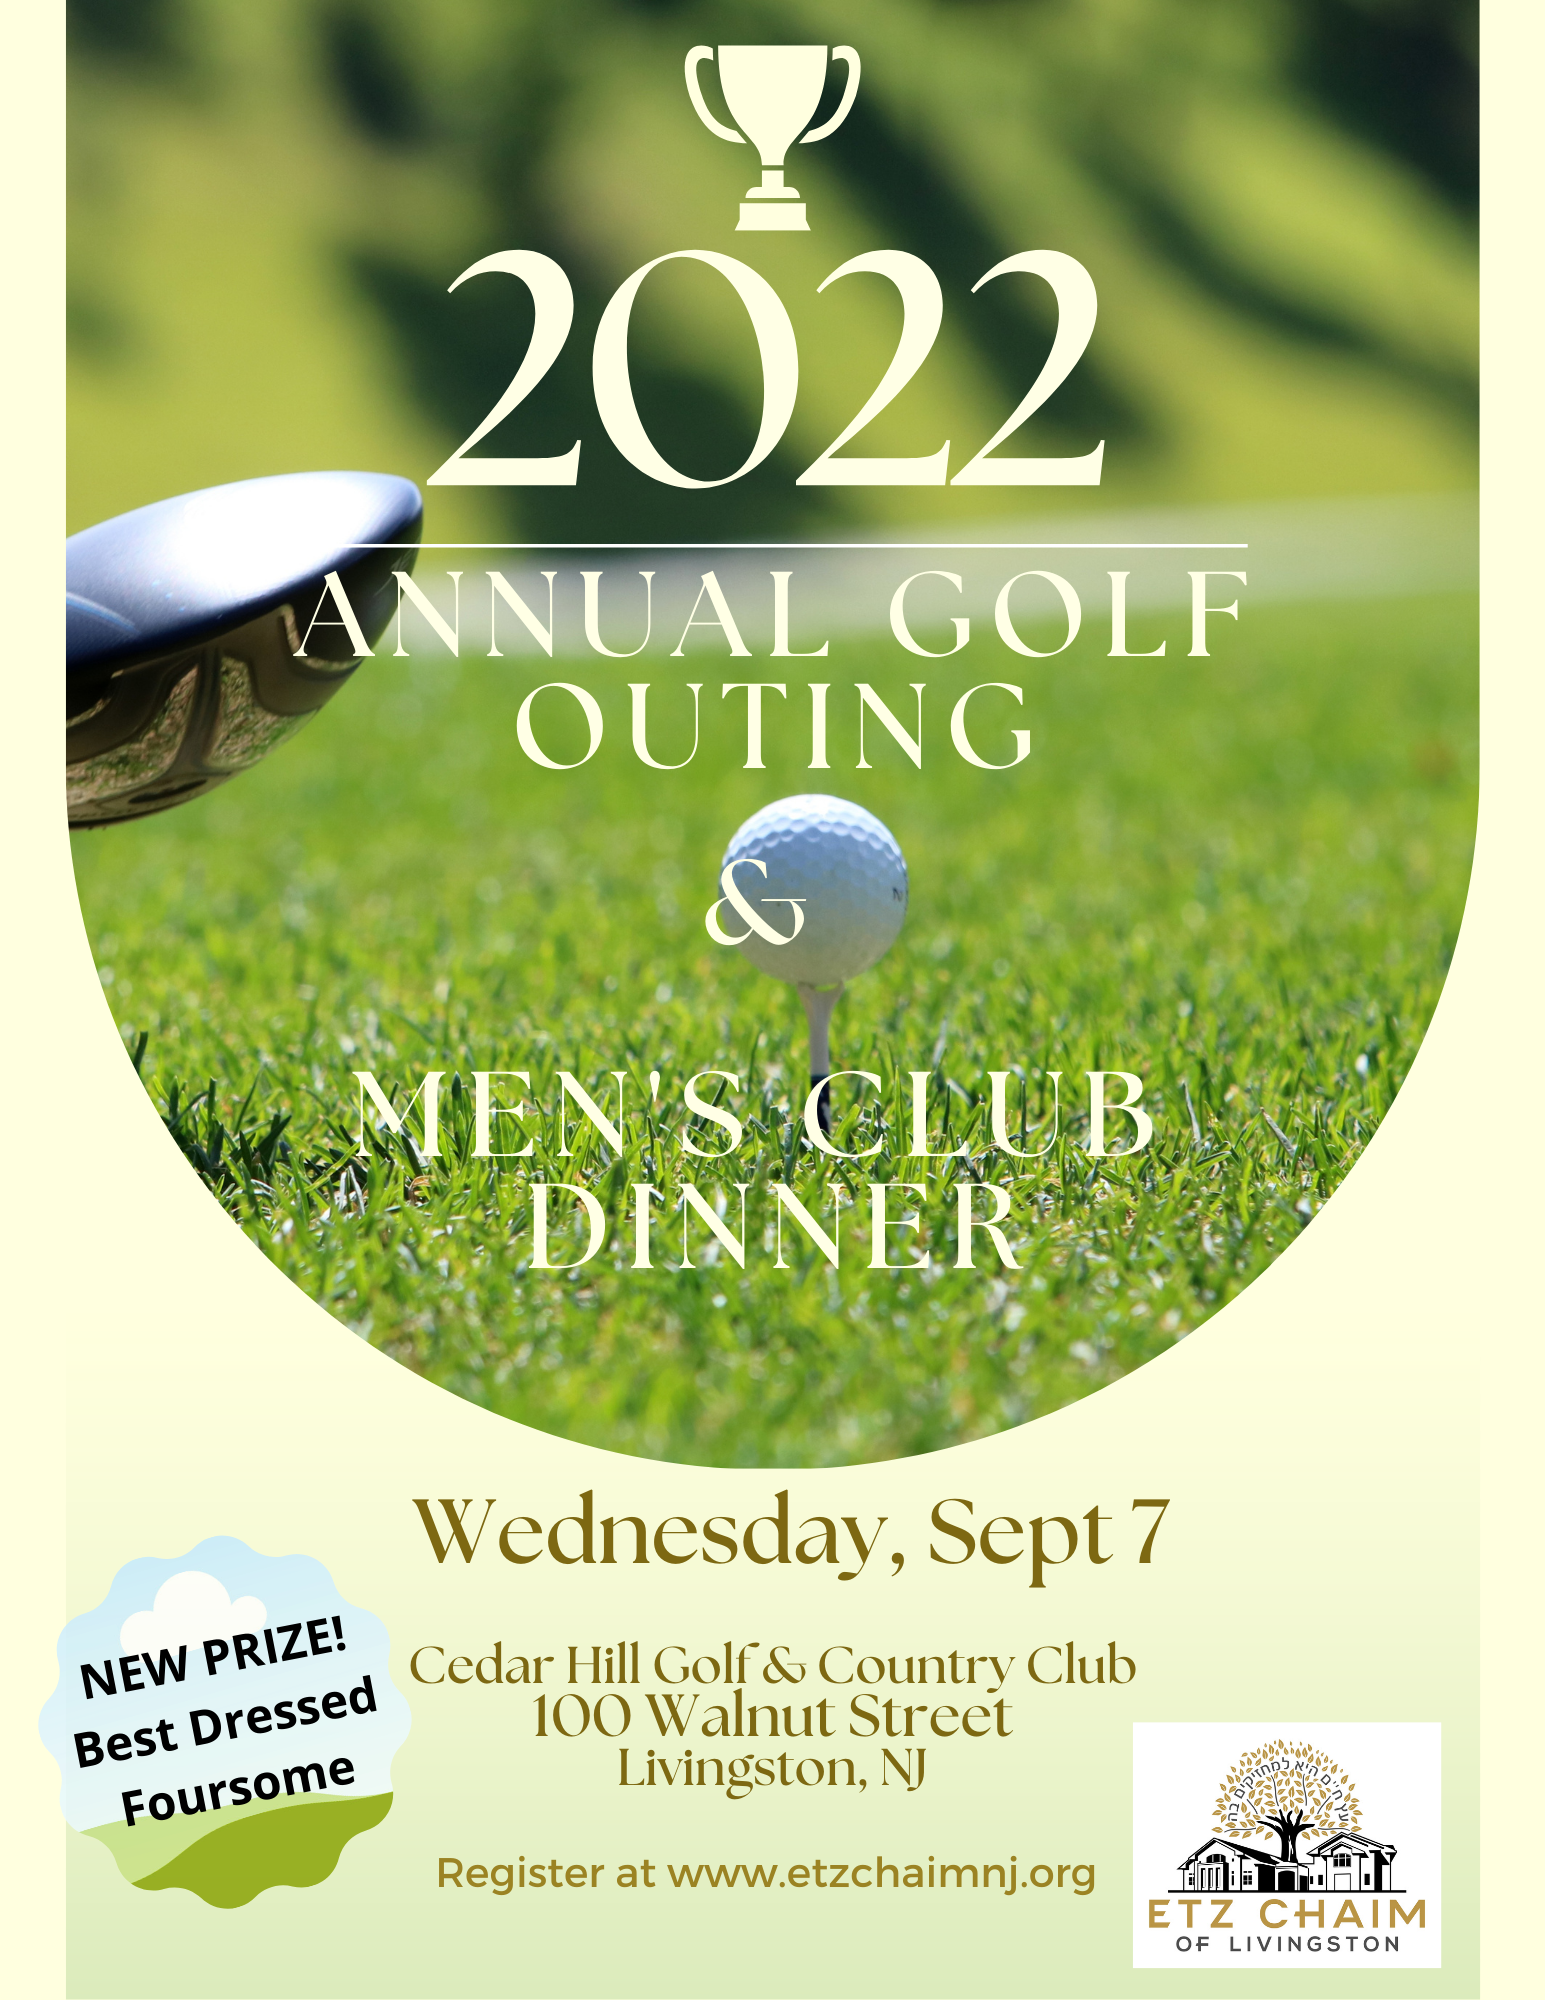 2022 Annual Golf Outing & Men's Club Dinner